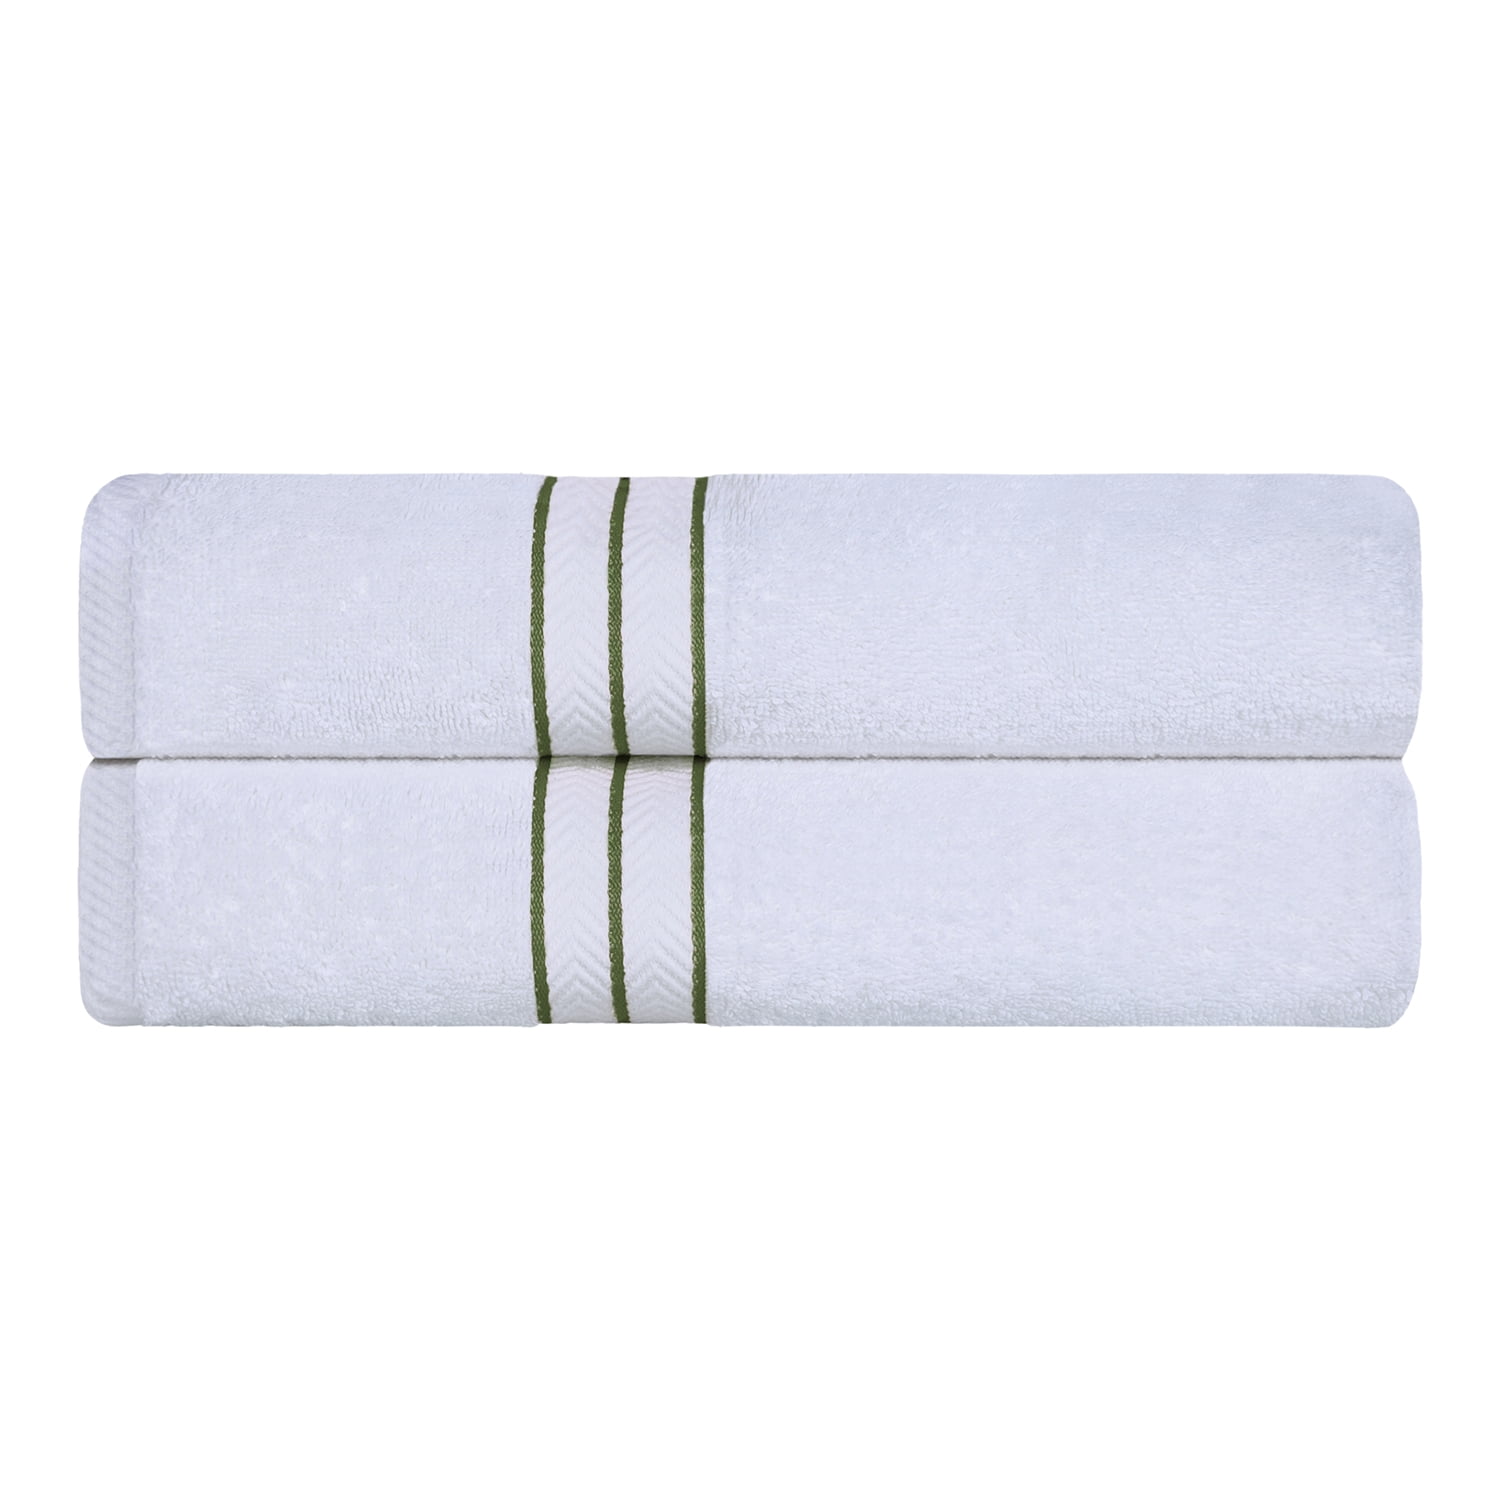 WETCAT Bundle: Turkish Bath Towel (38 x 71) and Turkish Hand Towels (20 x  30, Set of 2) - 100% Cotton, Prewashed for Soft Feel - Mint Green Decor 